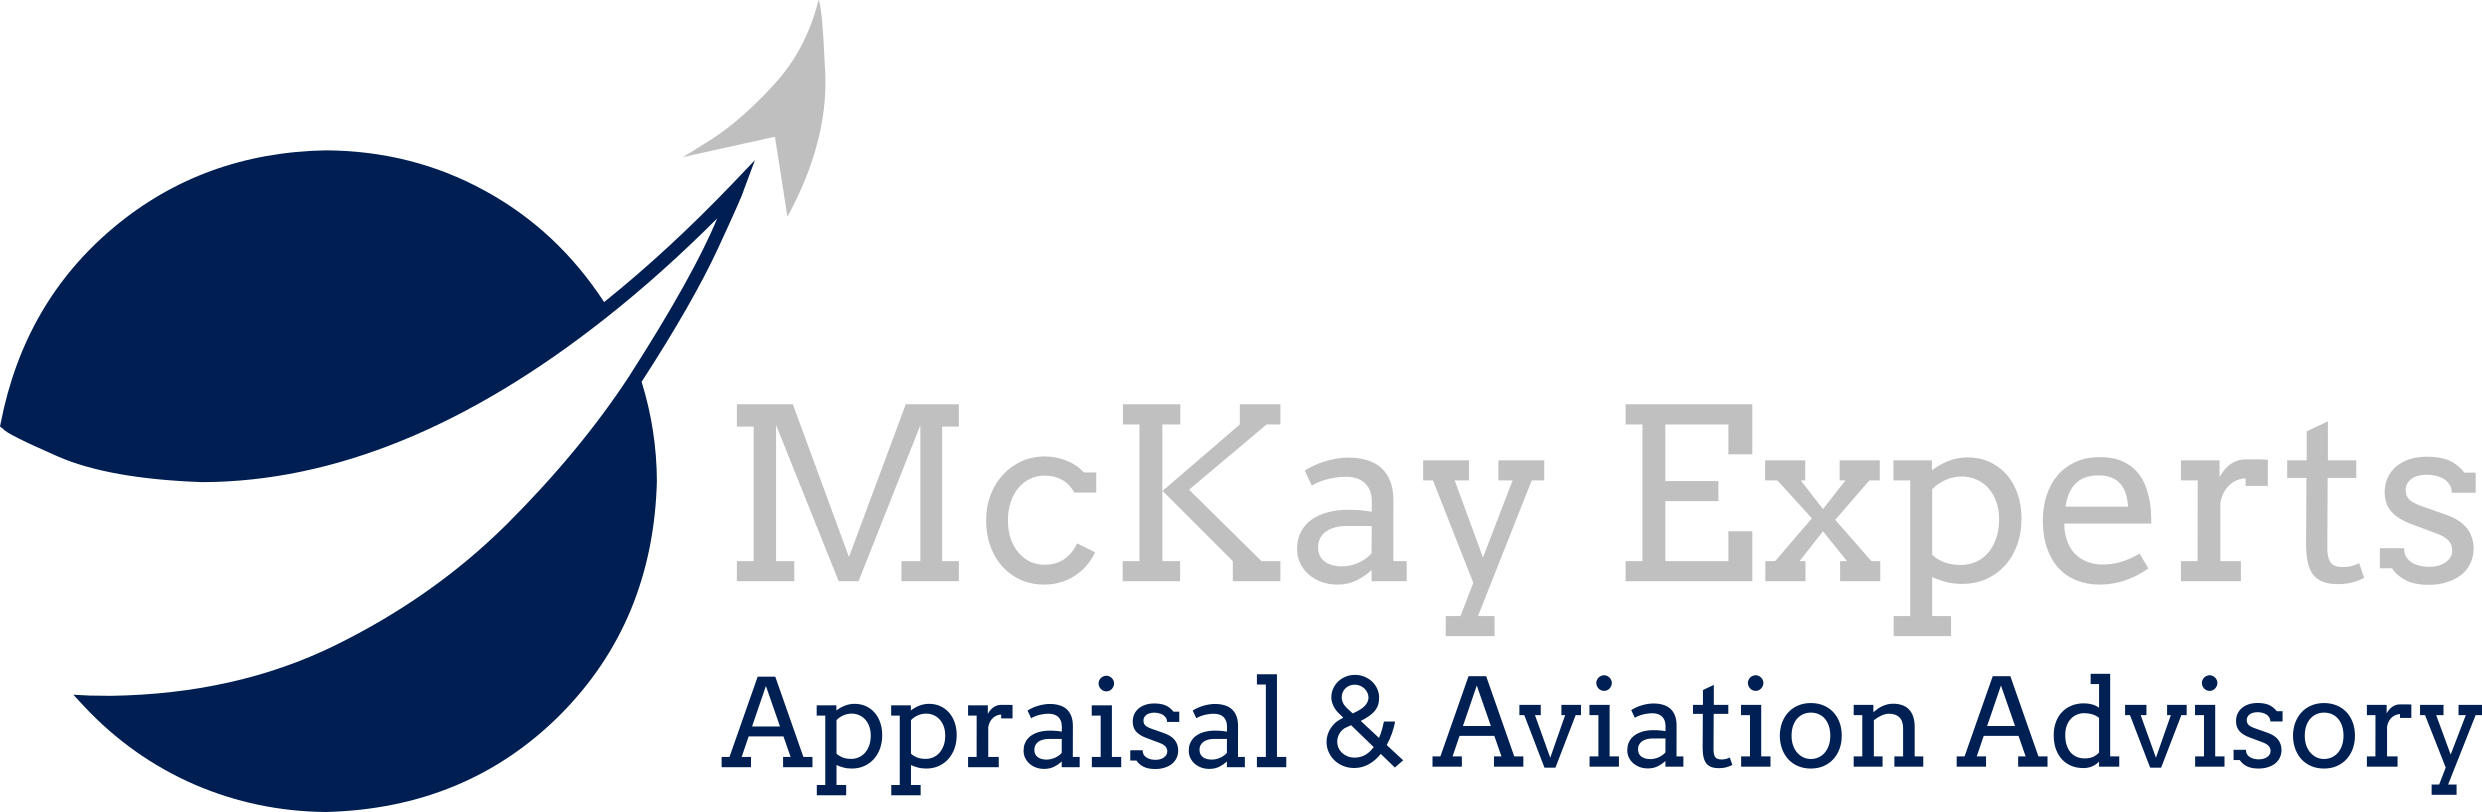 McKay Experts - Appraisal & Aviation Advisory